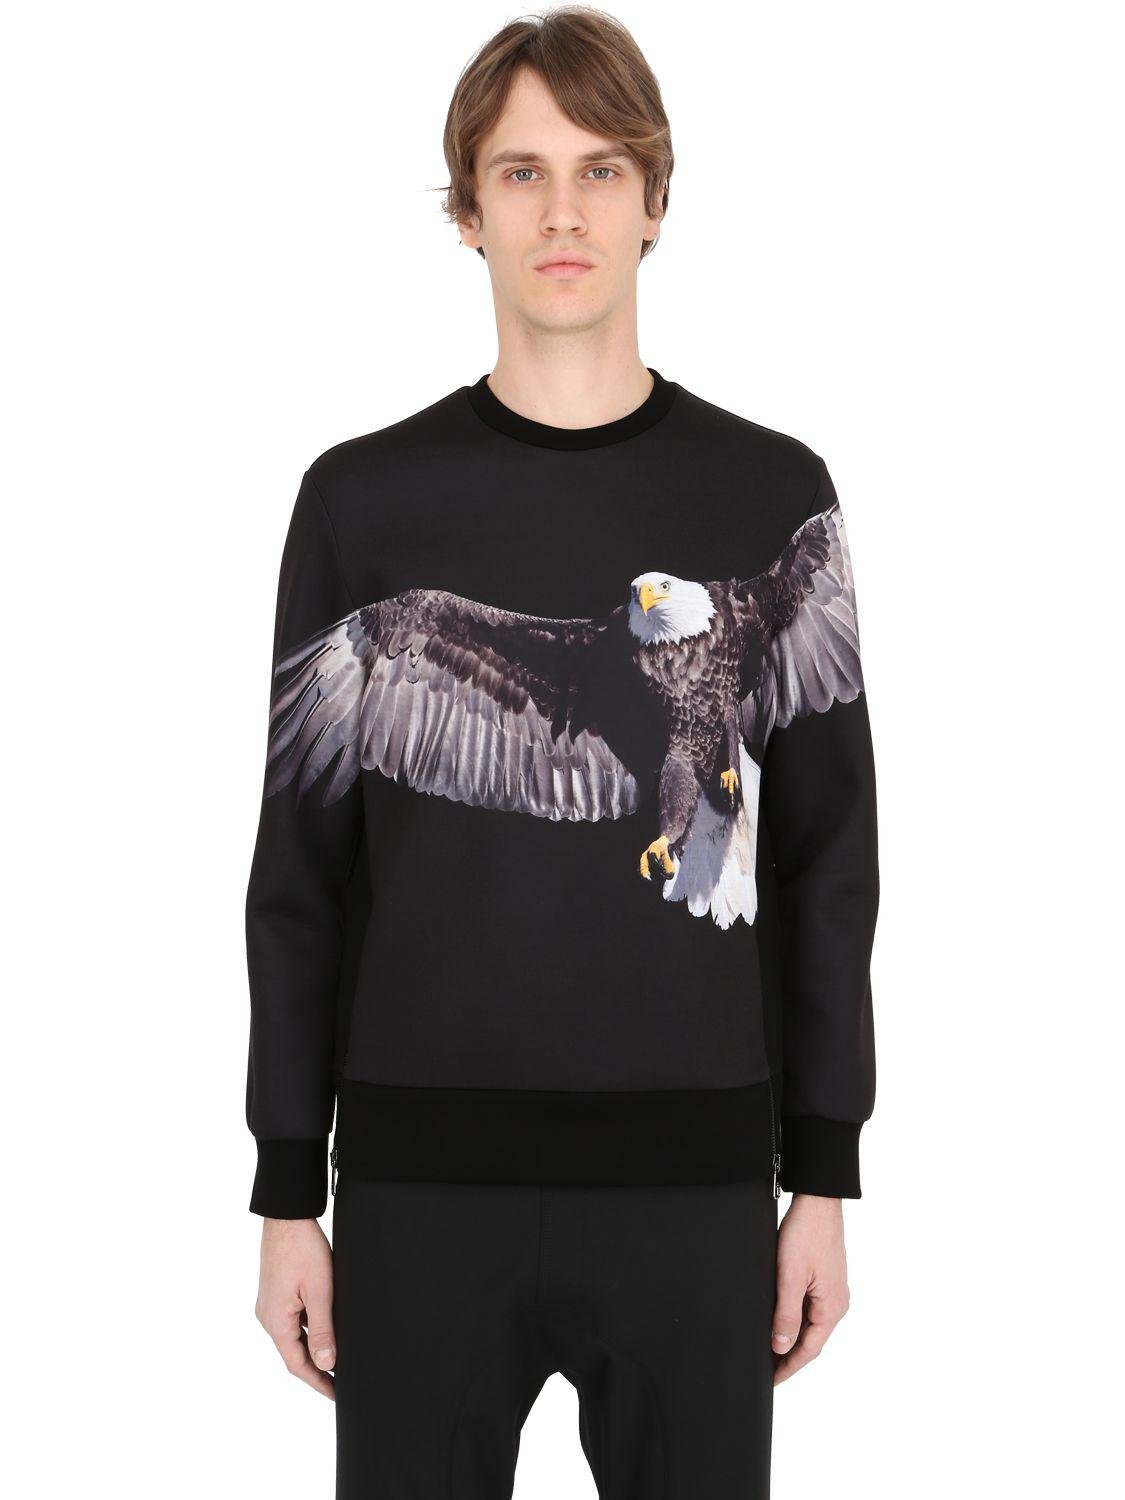 Neil Barrett Eagle Printed Neoprene Sweatshirt in Black for Men - Lyst